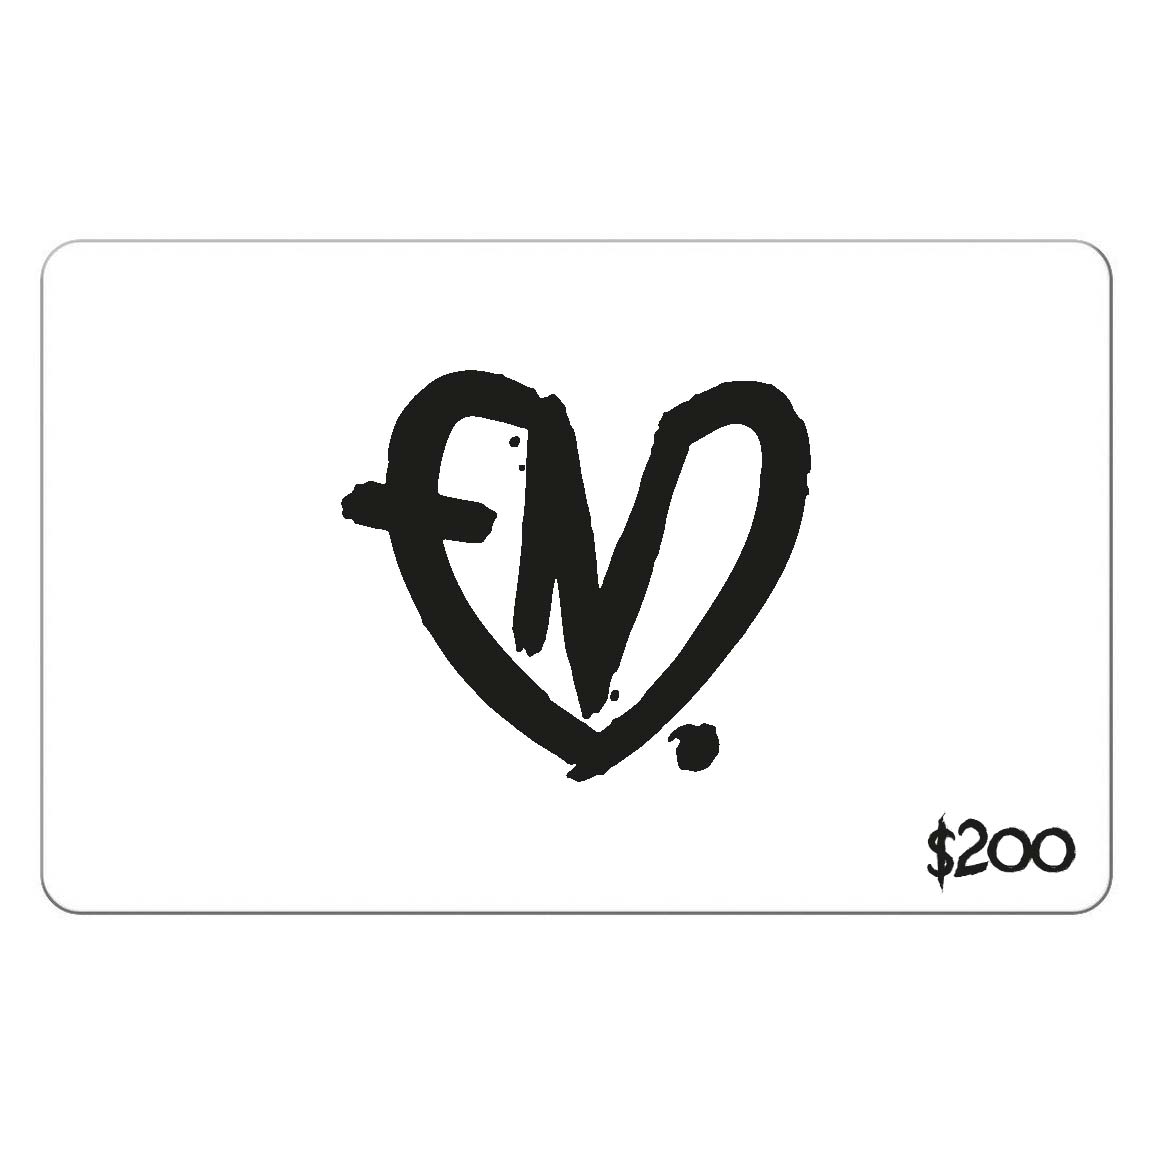 END Heart logo gift card - $200